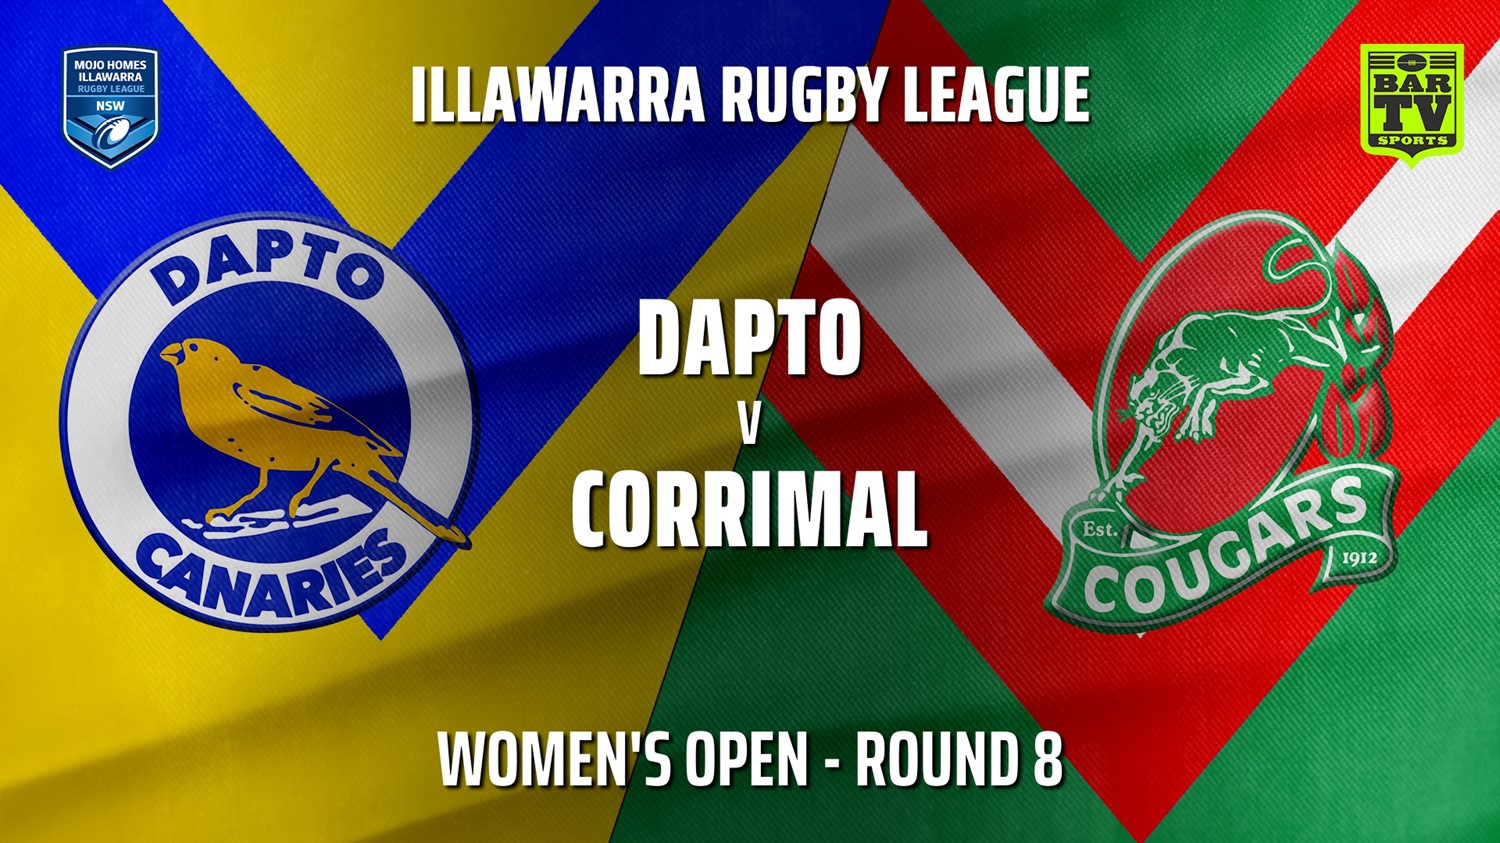 210605-IRL Round 8 - Women's Open - Dapto Canaries v Corrimal Cougars Slate Image